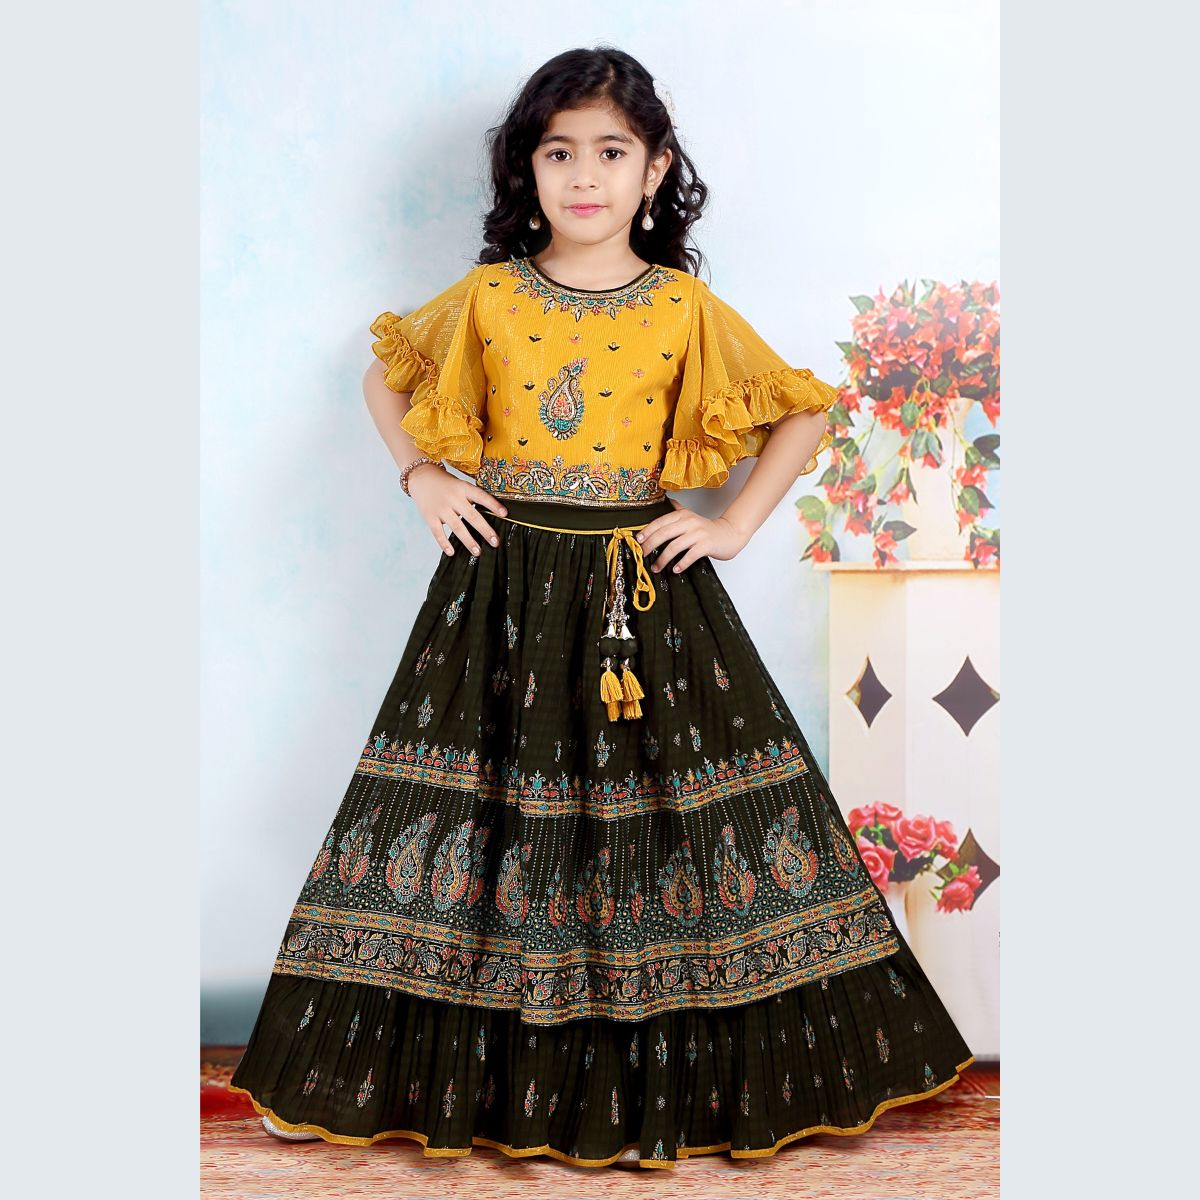 Chandrakala Kids Lehenga Choli Set for Girls Indian Traditional Cream &  Gold-Coloured Ready to Wear Pattu Pavadai Ethnic Wear Dress Skirt Tops-6-12  Months, Cream (KL104CRE1) - Walmart.com